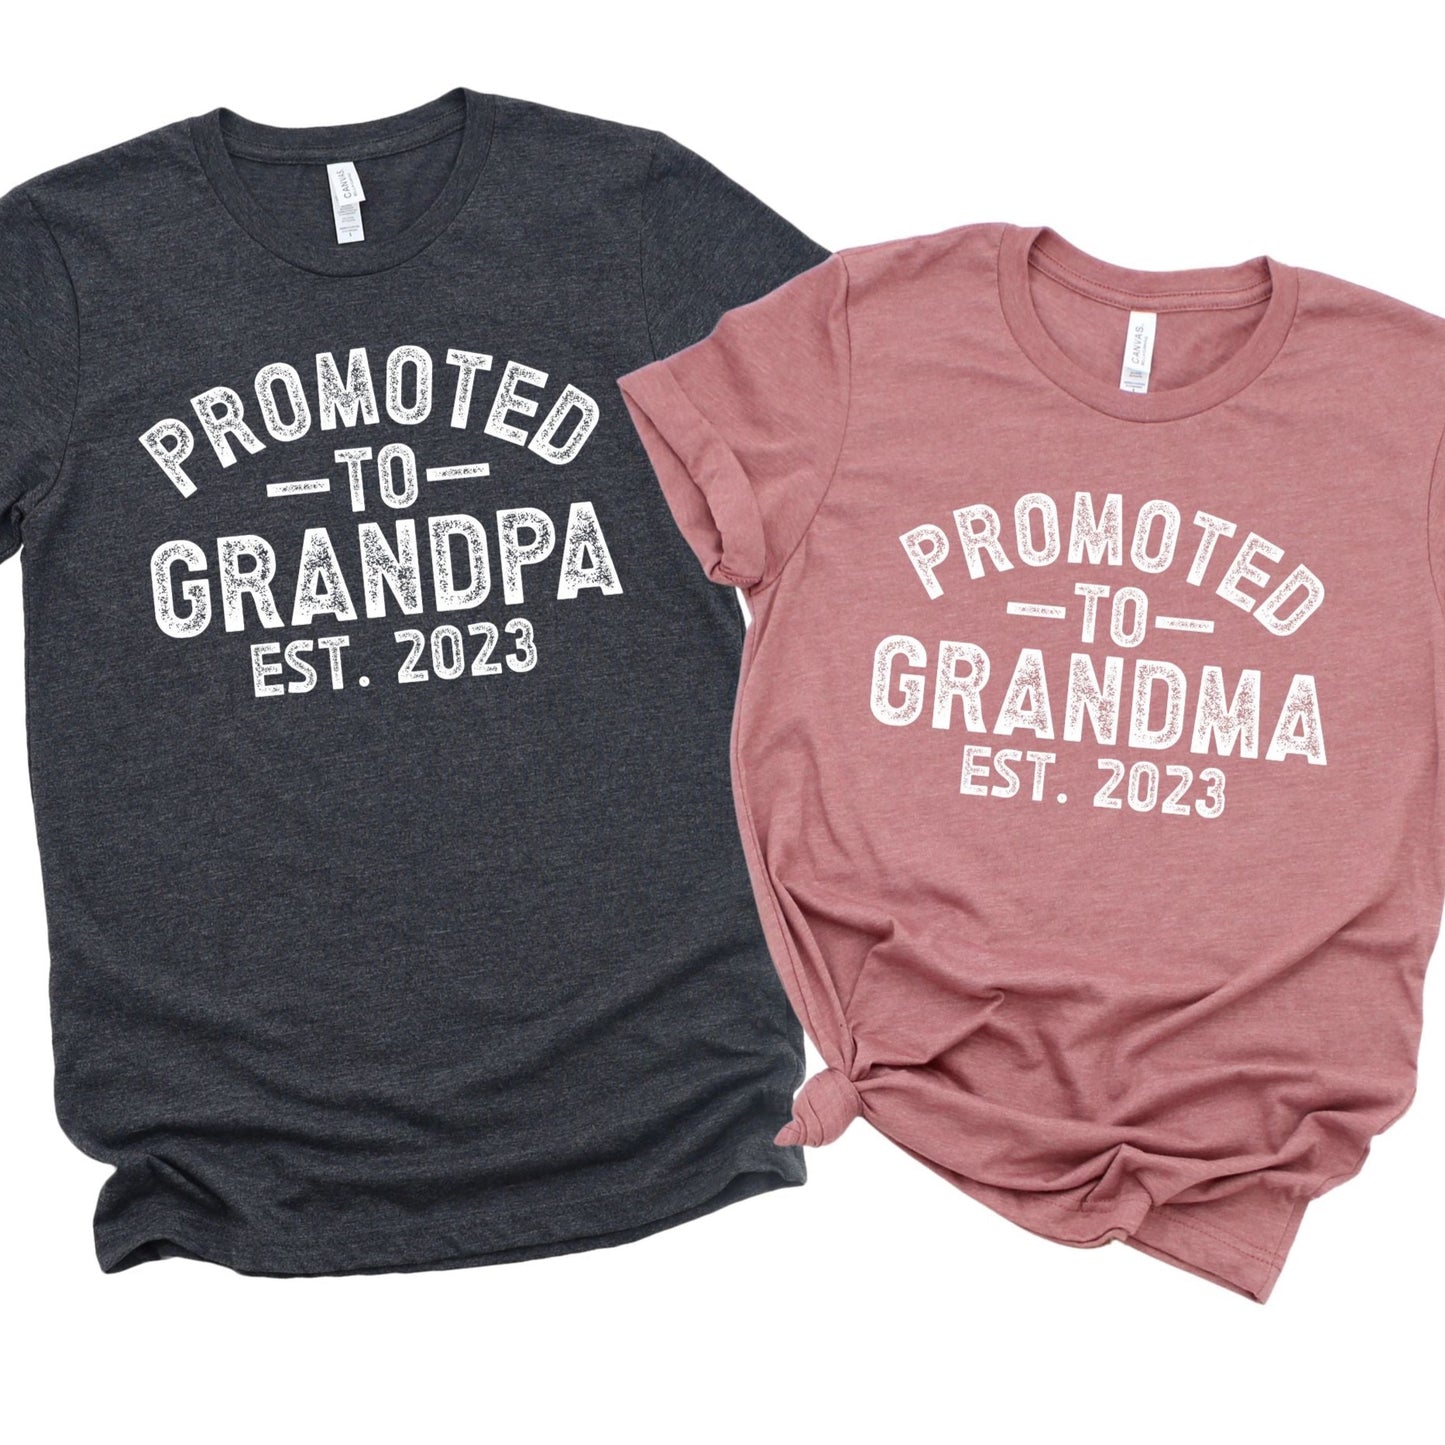 Promoted to Grandma / Grandpa EST 2023 (Distressed)